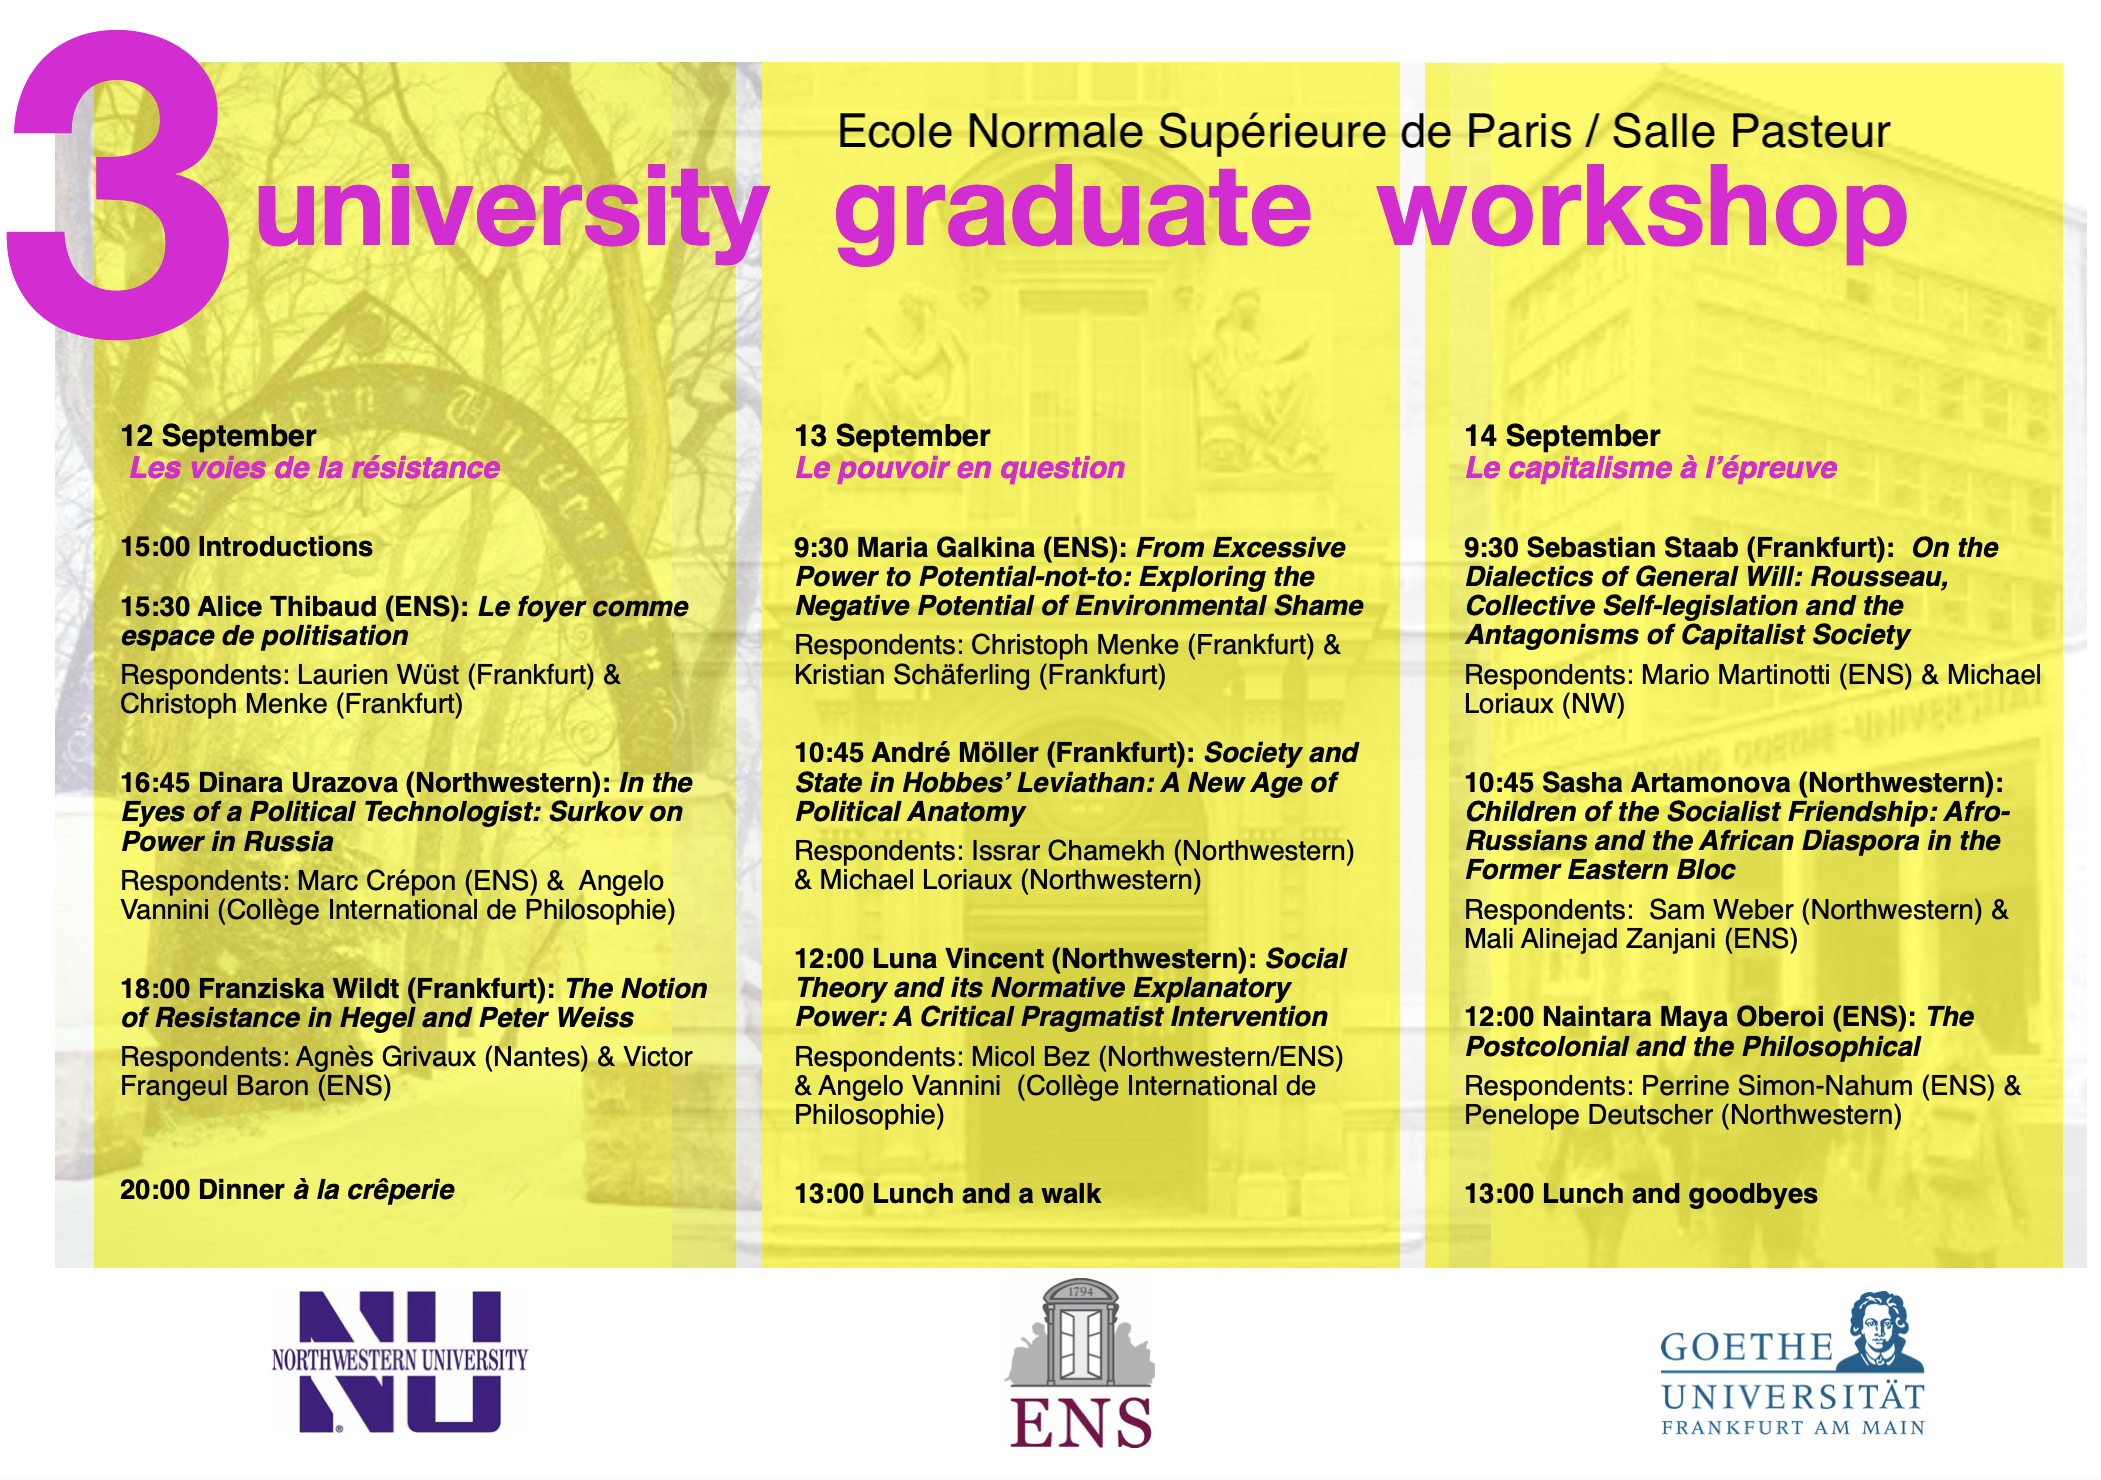 poster-tri-university-graduate-workshop-ensnorthwesternfrankfurt-.png